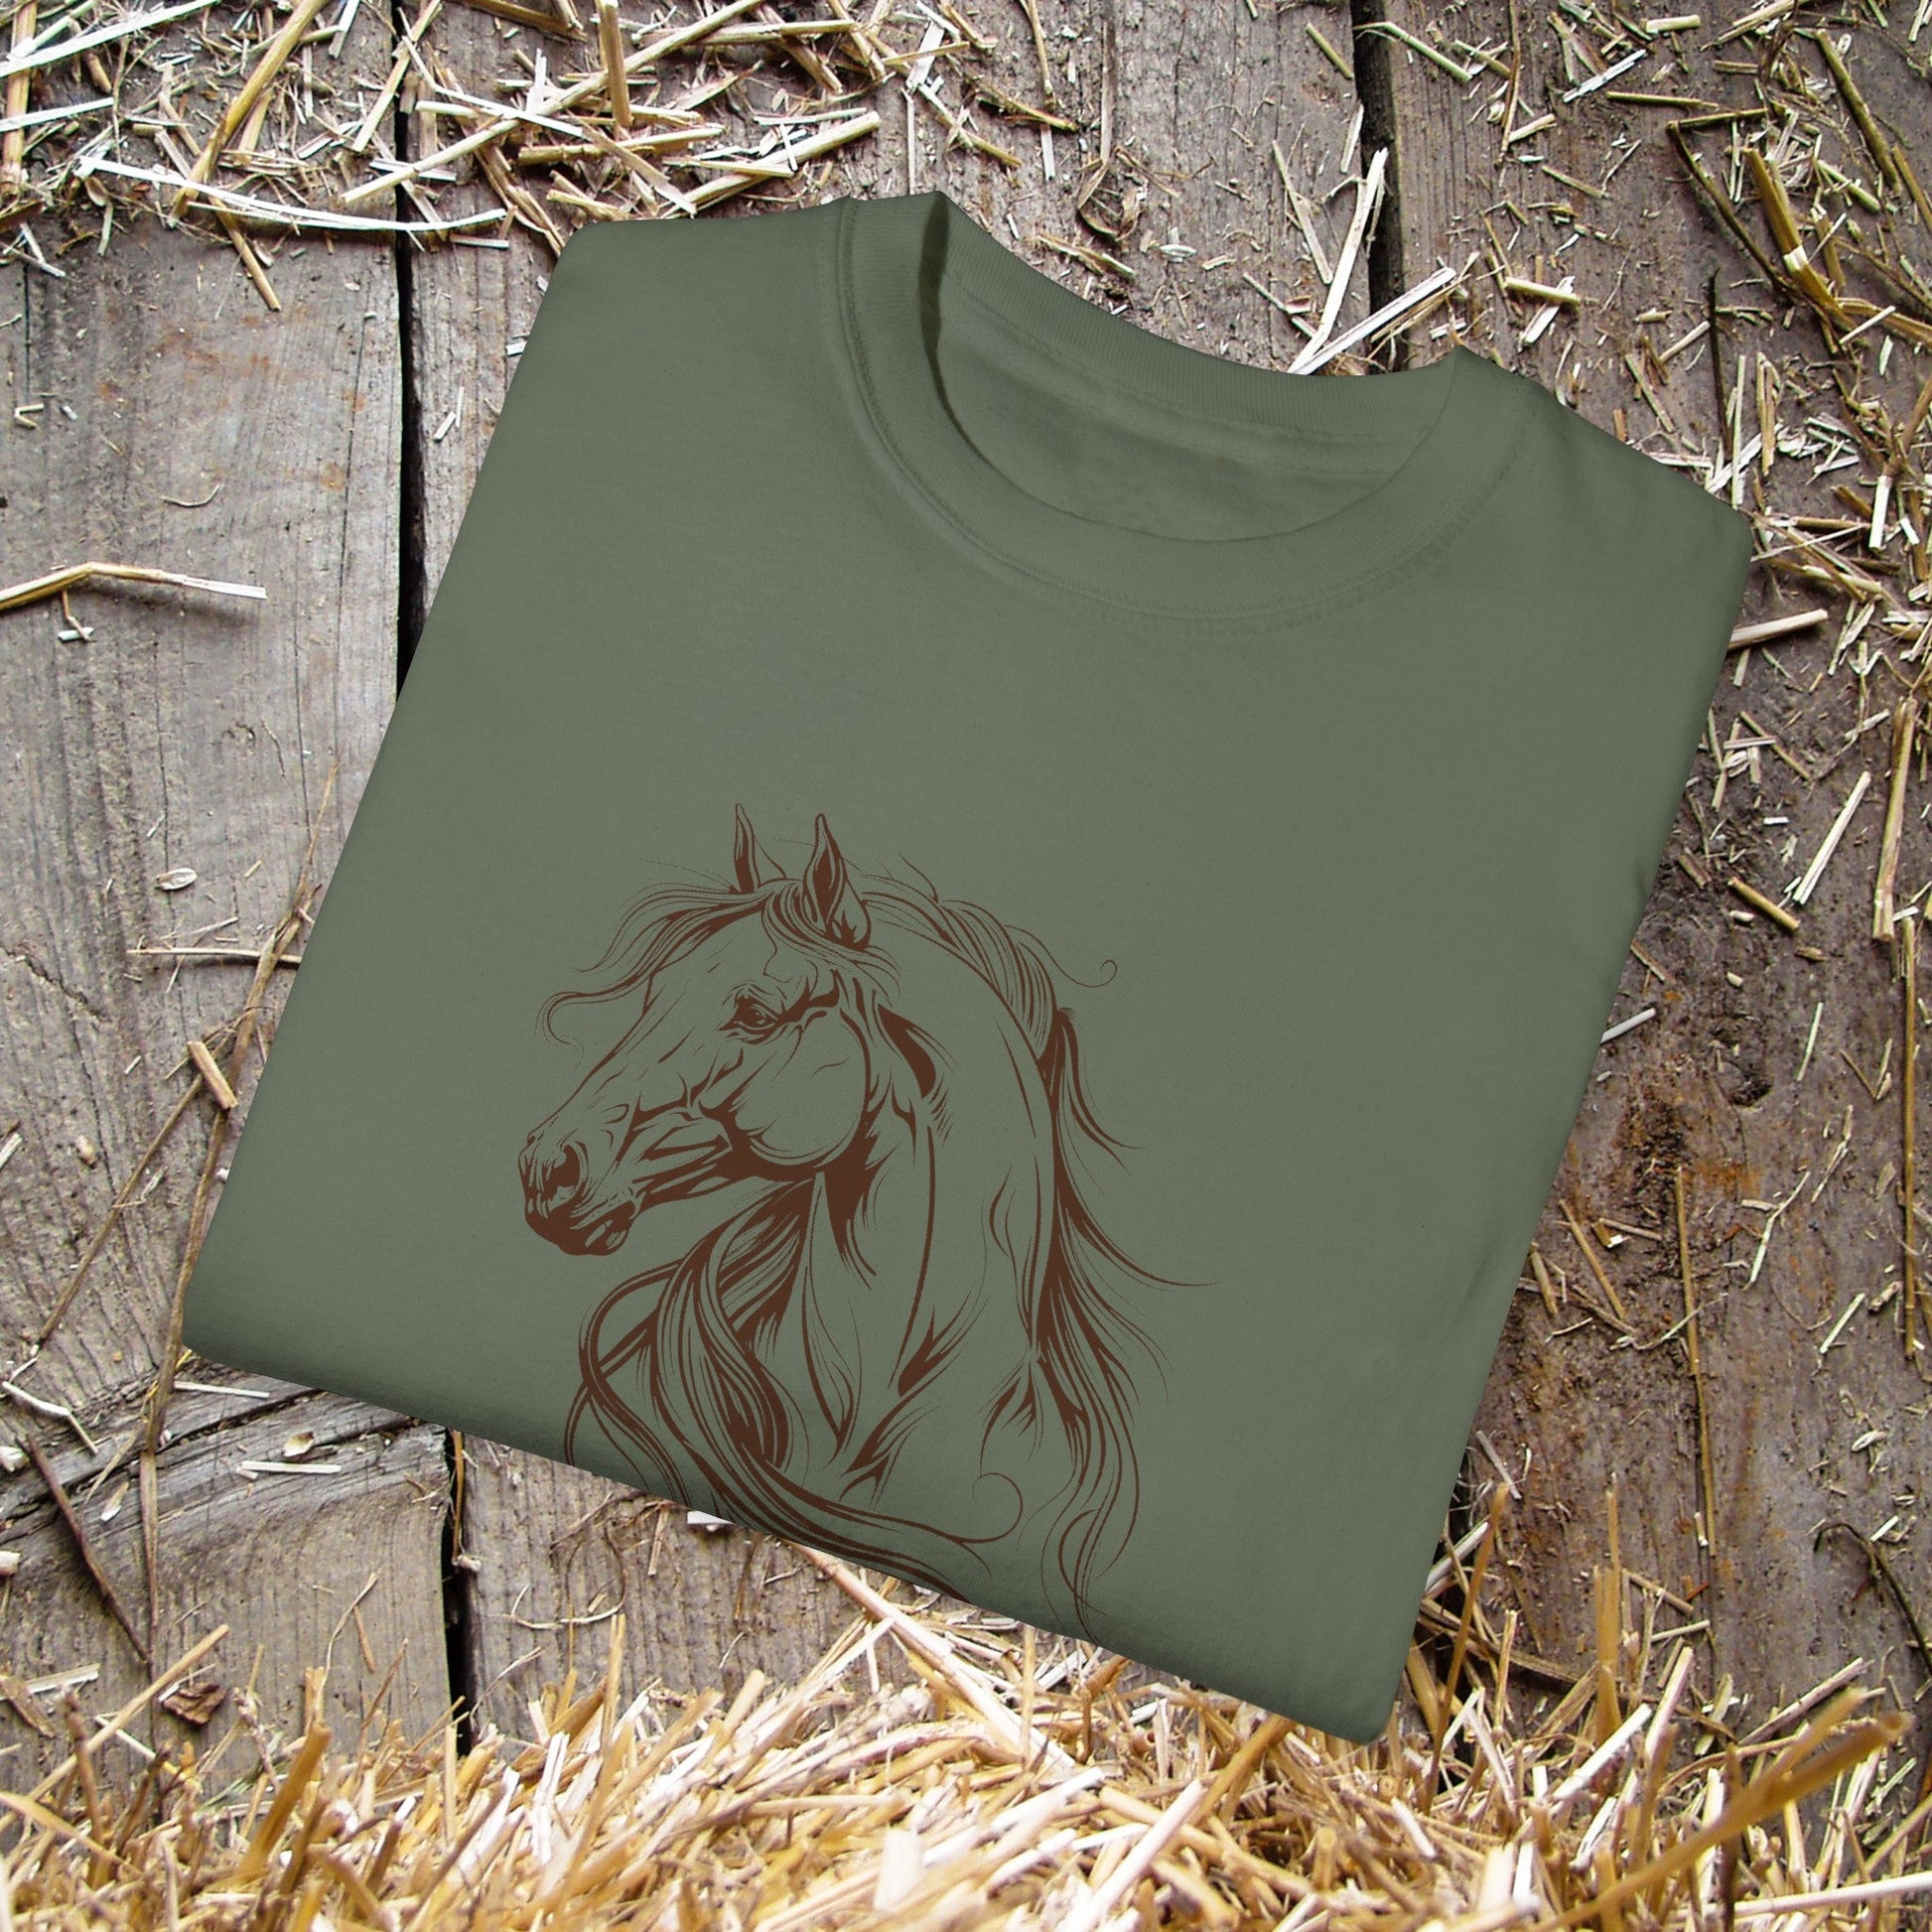 Original Horse Art Tshirt, Spirited Drawing of a Horse, Comfort Colors Shirt - FlooredByArt